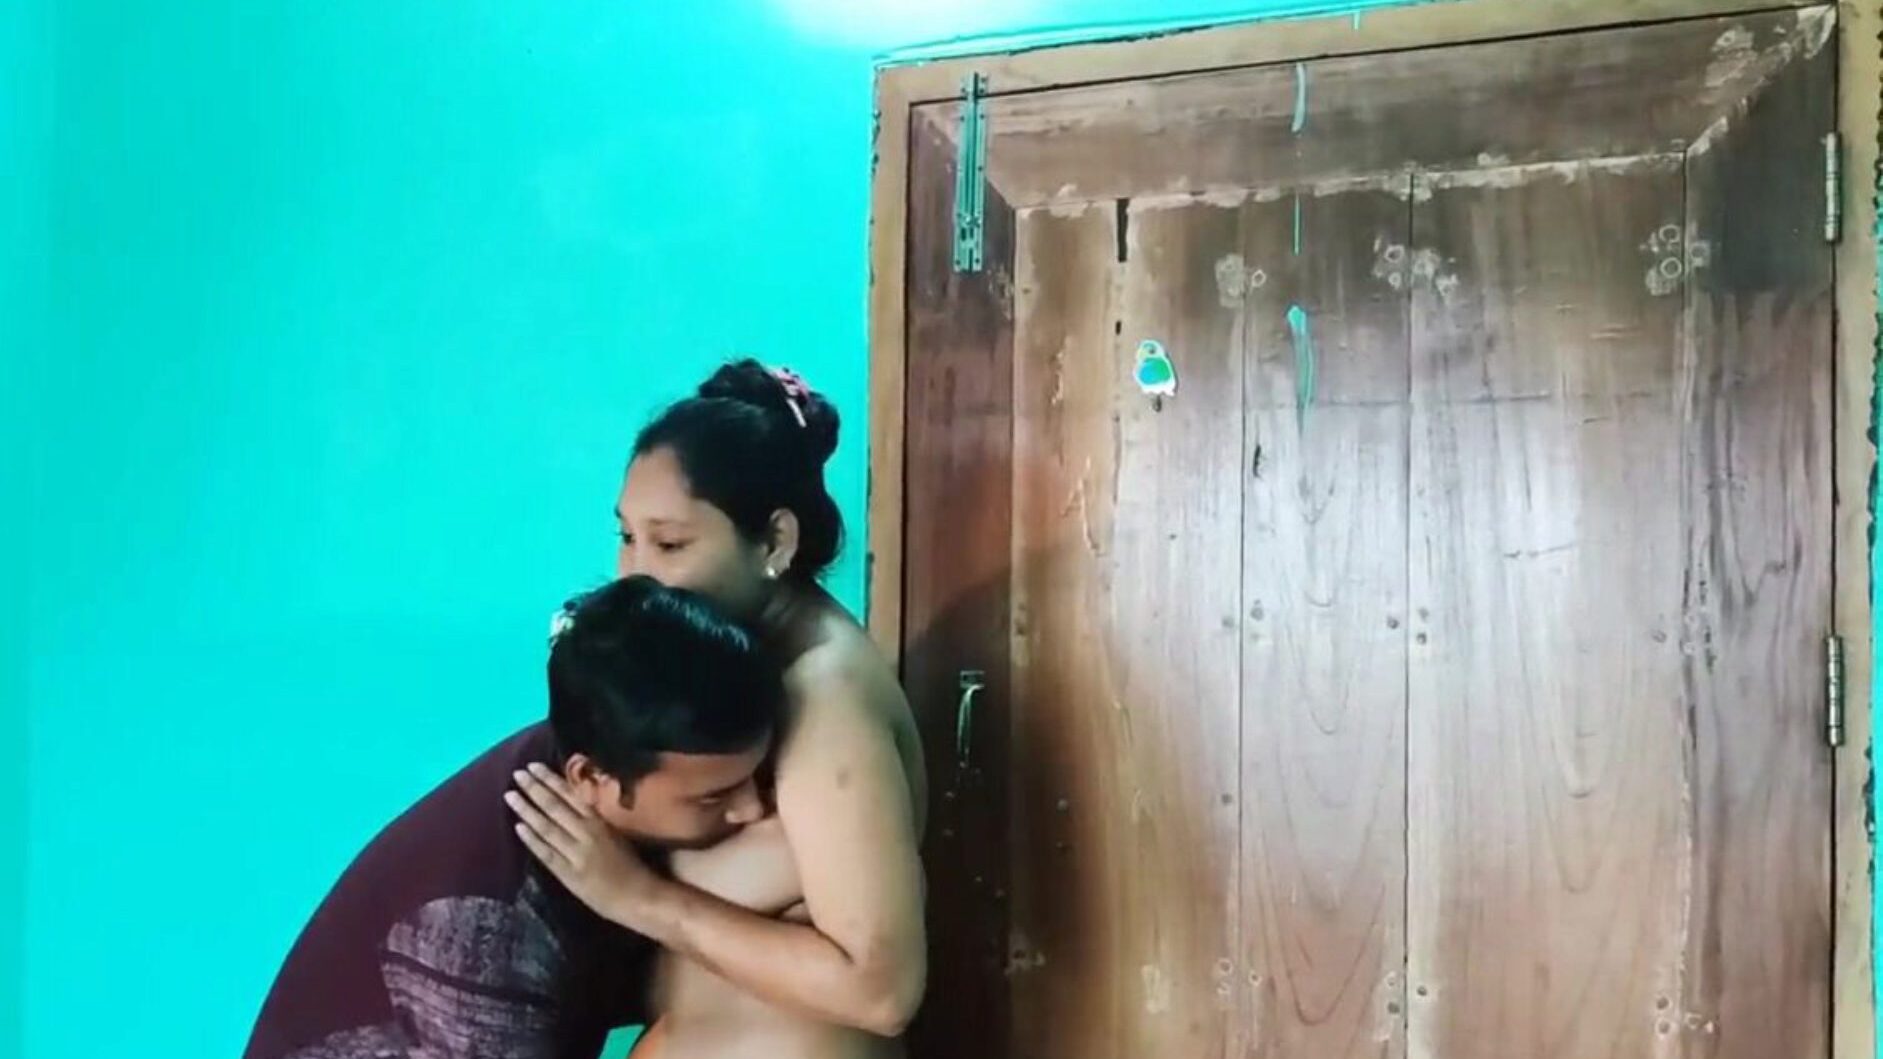 desi bengali σεξ βίντεο γυμνό, δωρεάν ασιατικό πορνό 6c: xhamster παρακολουθήστε desi bengali σεξ βίντεο γυμνό επεισόδιο στο xhamster, ο πιο παχύς πόρος ιστού σωλήνα hd fuck-fest με τόνους δωρεάν για όλα τα ασιατικά xxn σεξ και βίντεο πρωκτικής πορνογραφίας